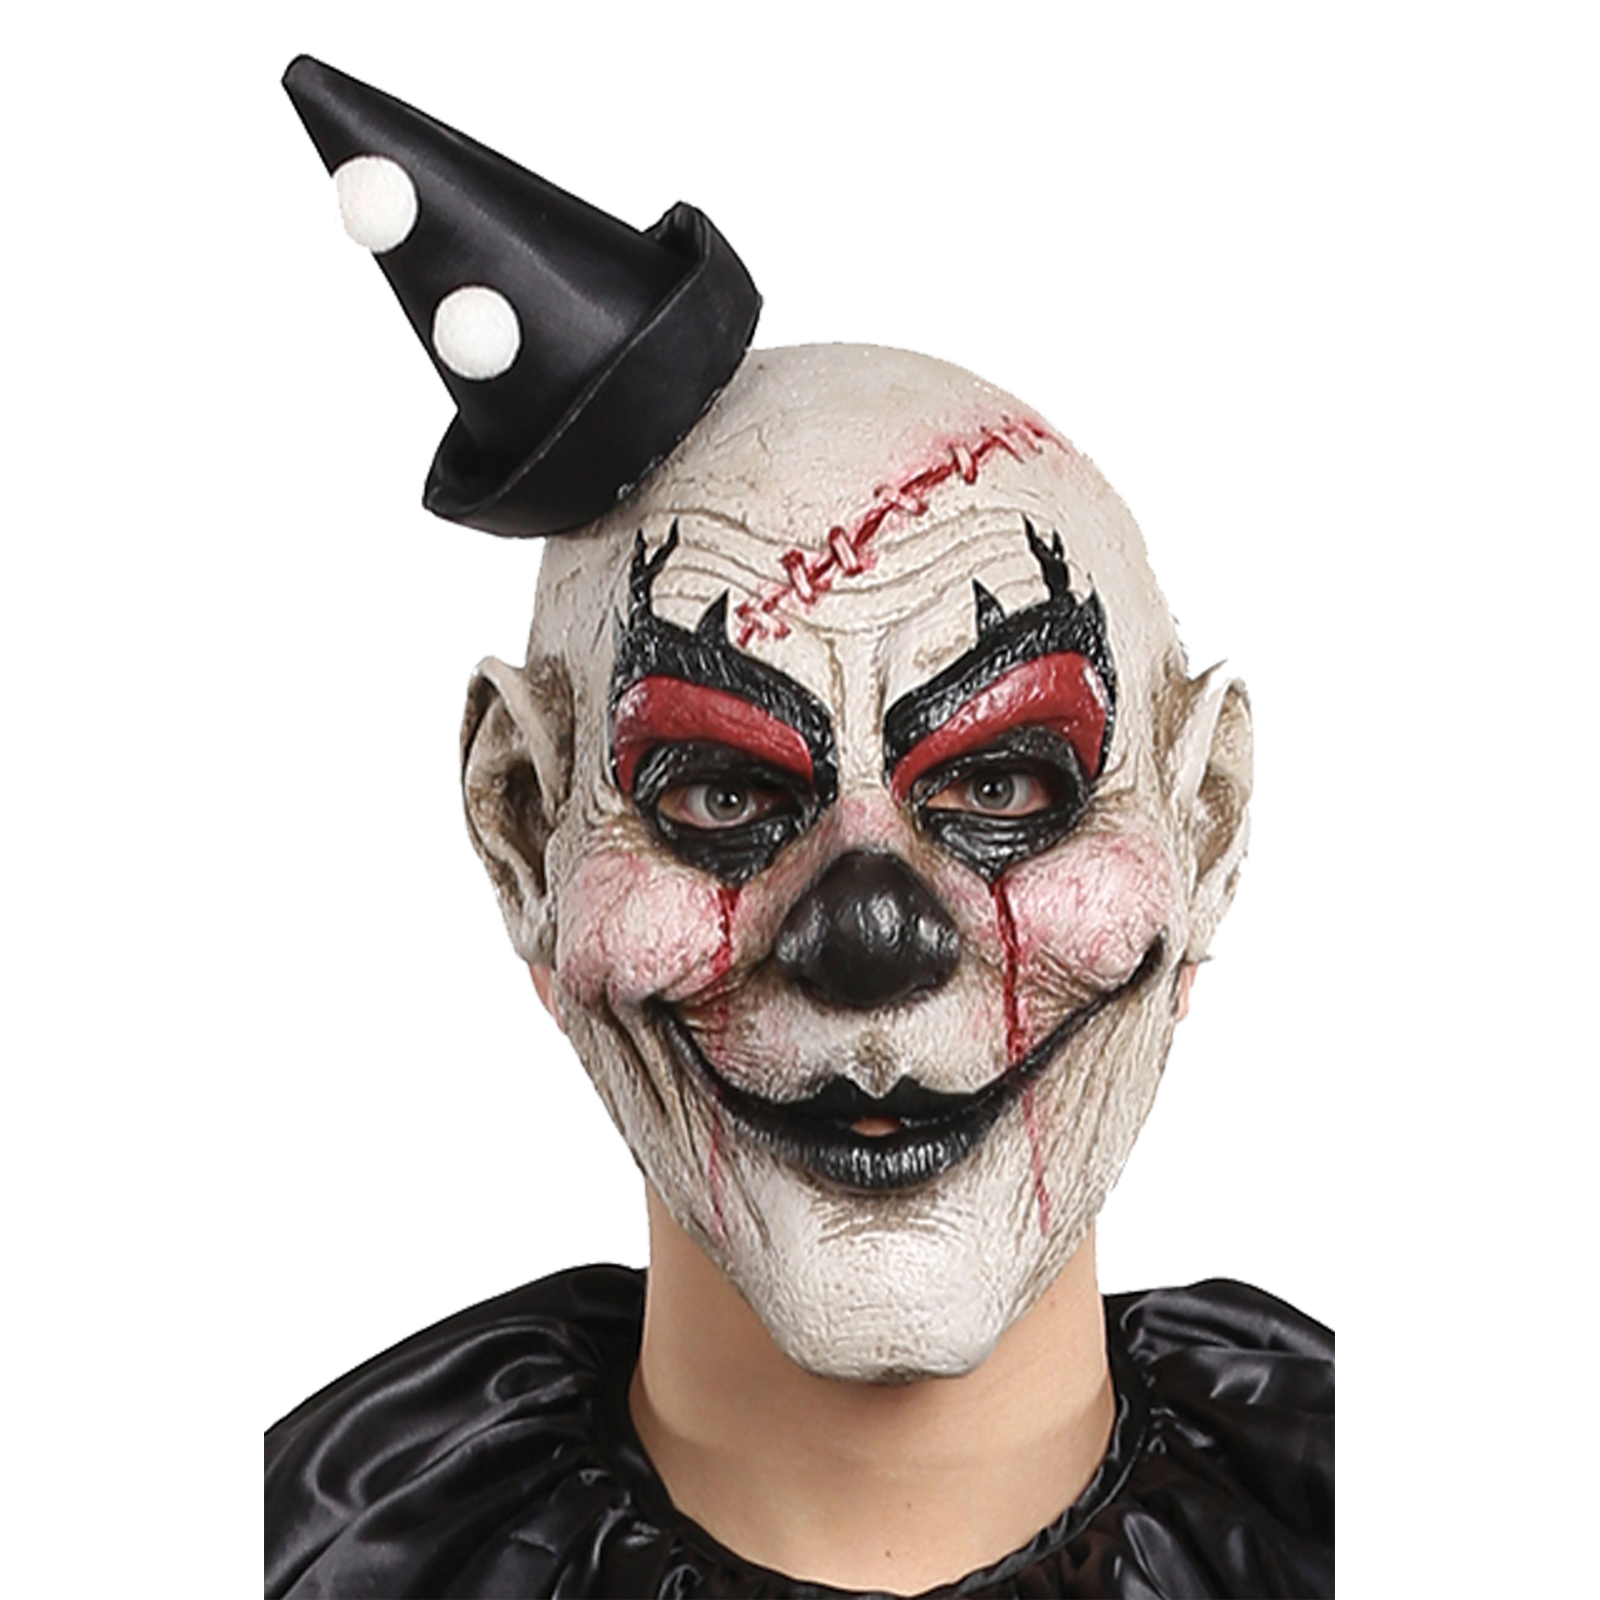 Kill Joy Clown Mask Costume Accessory